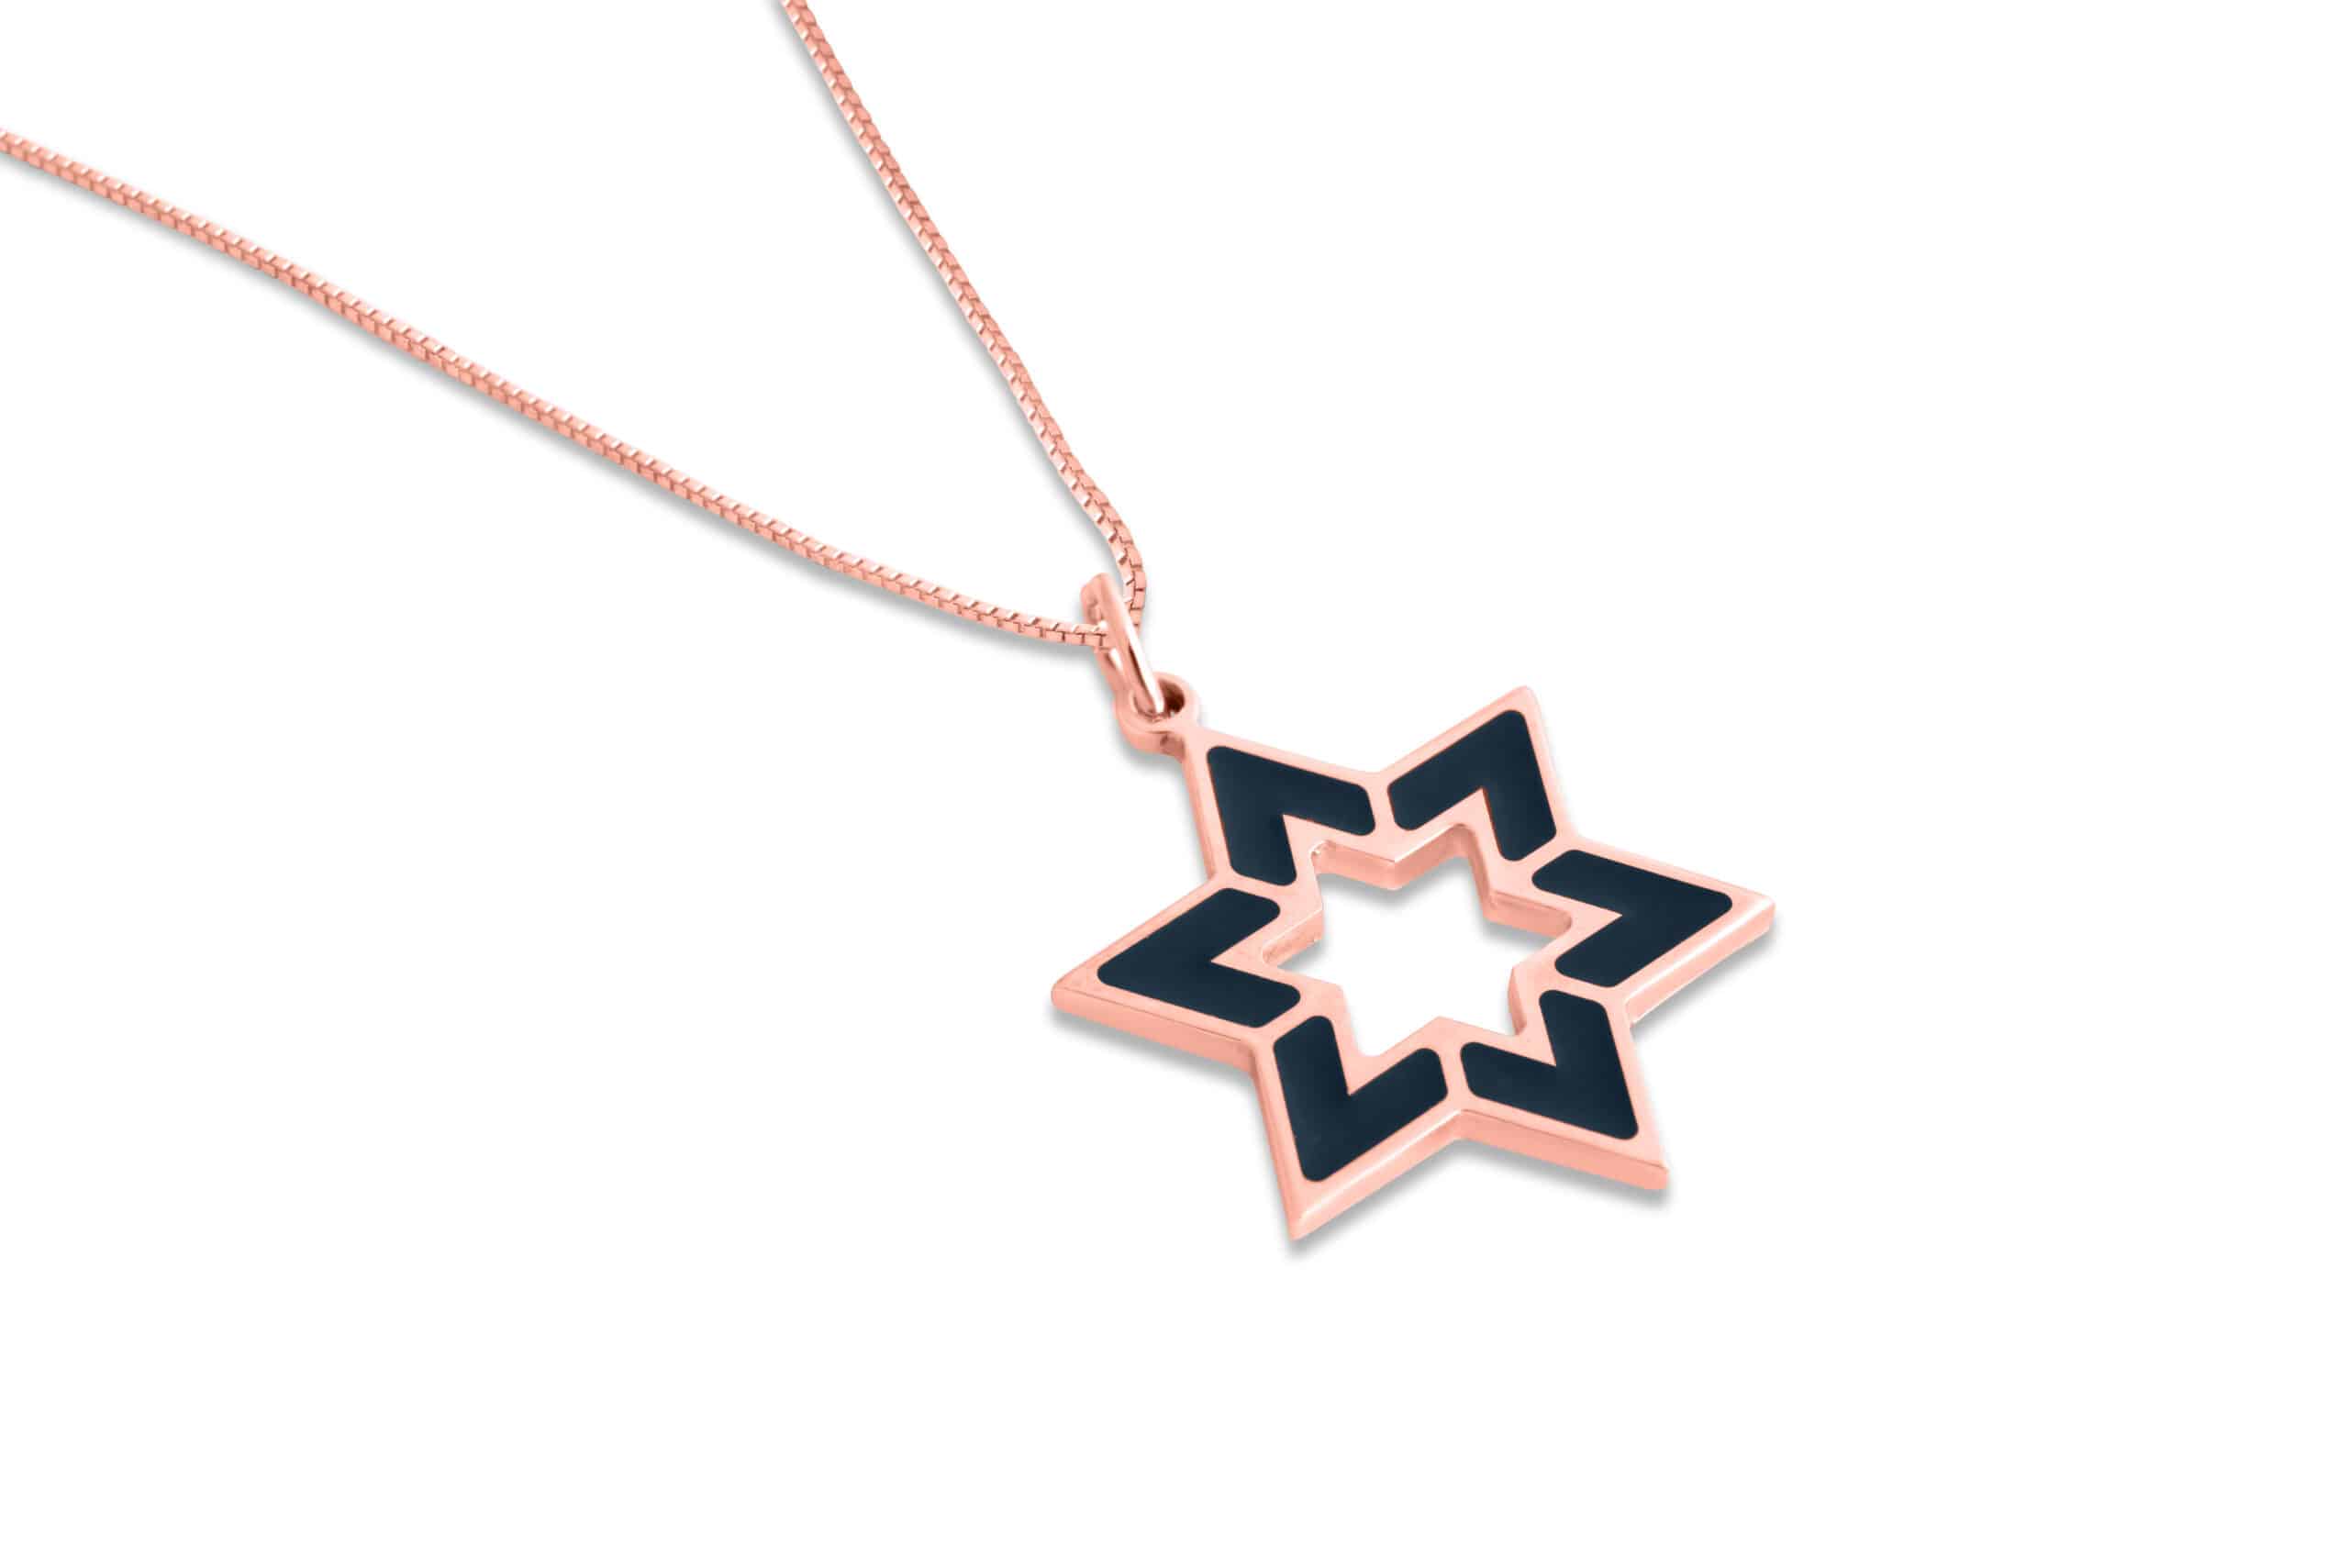 Star of David Hollow Enameled Gold Pendant